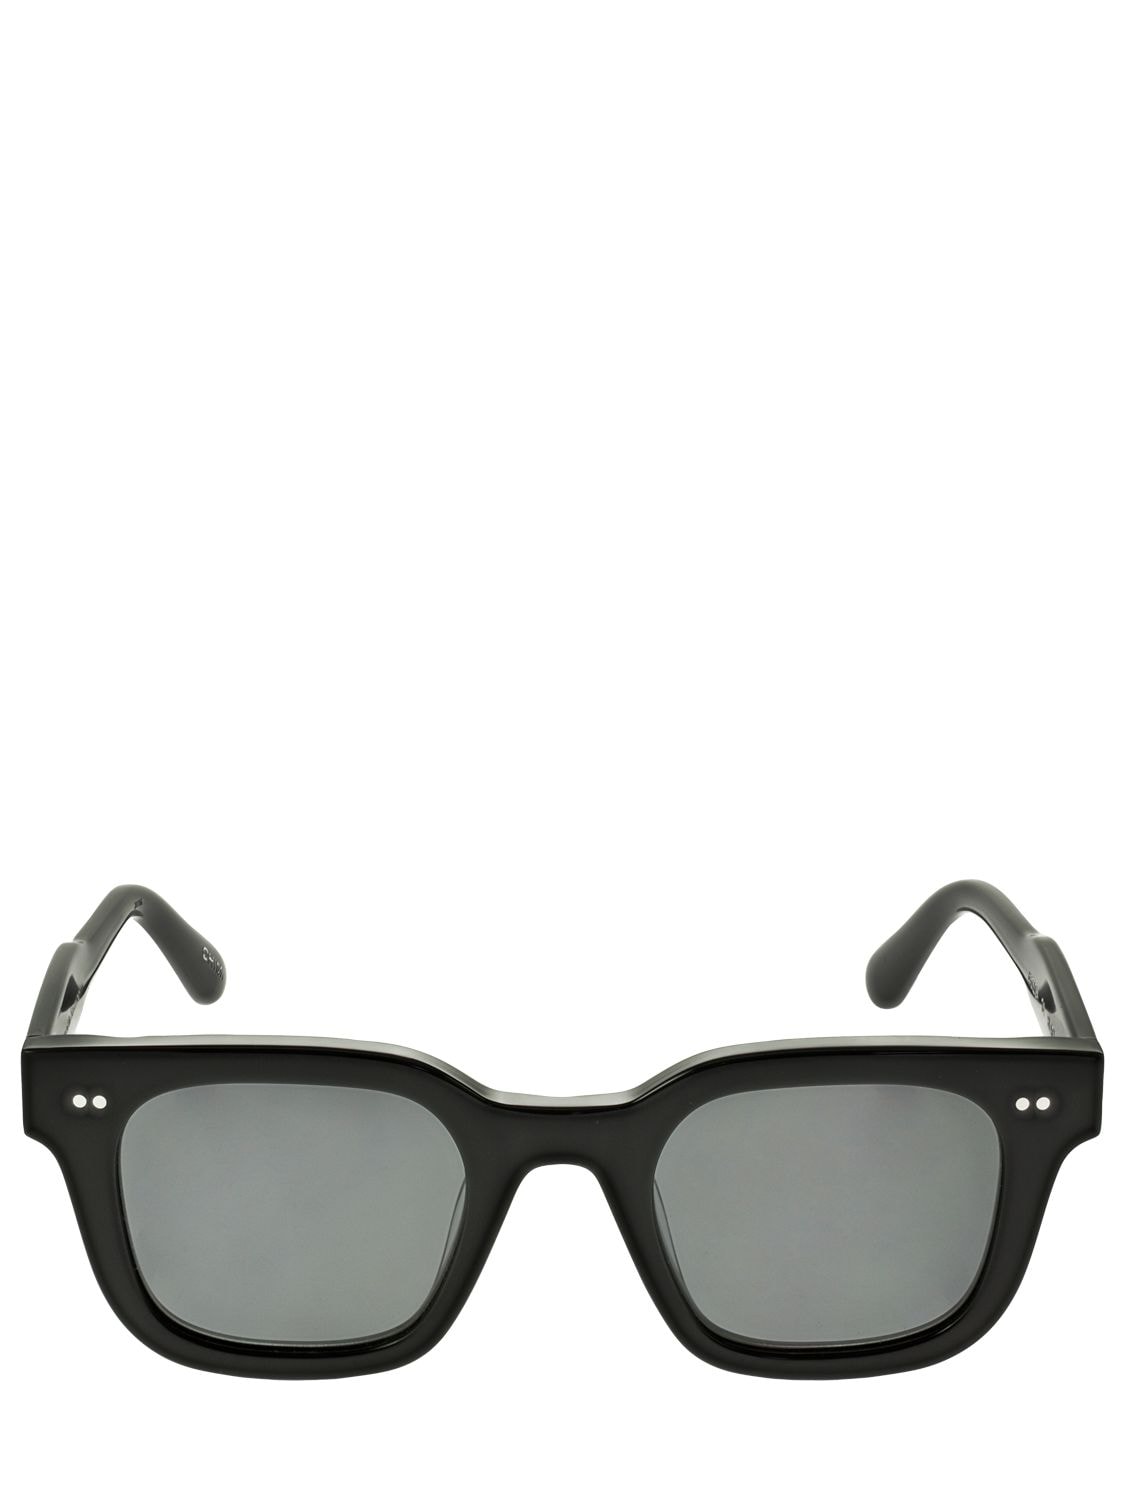 Chimi 04 Squared Acetate Sunglasses In Black